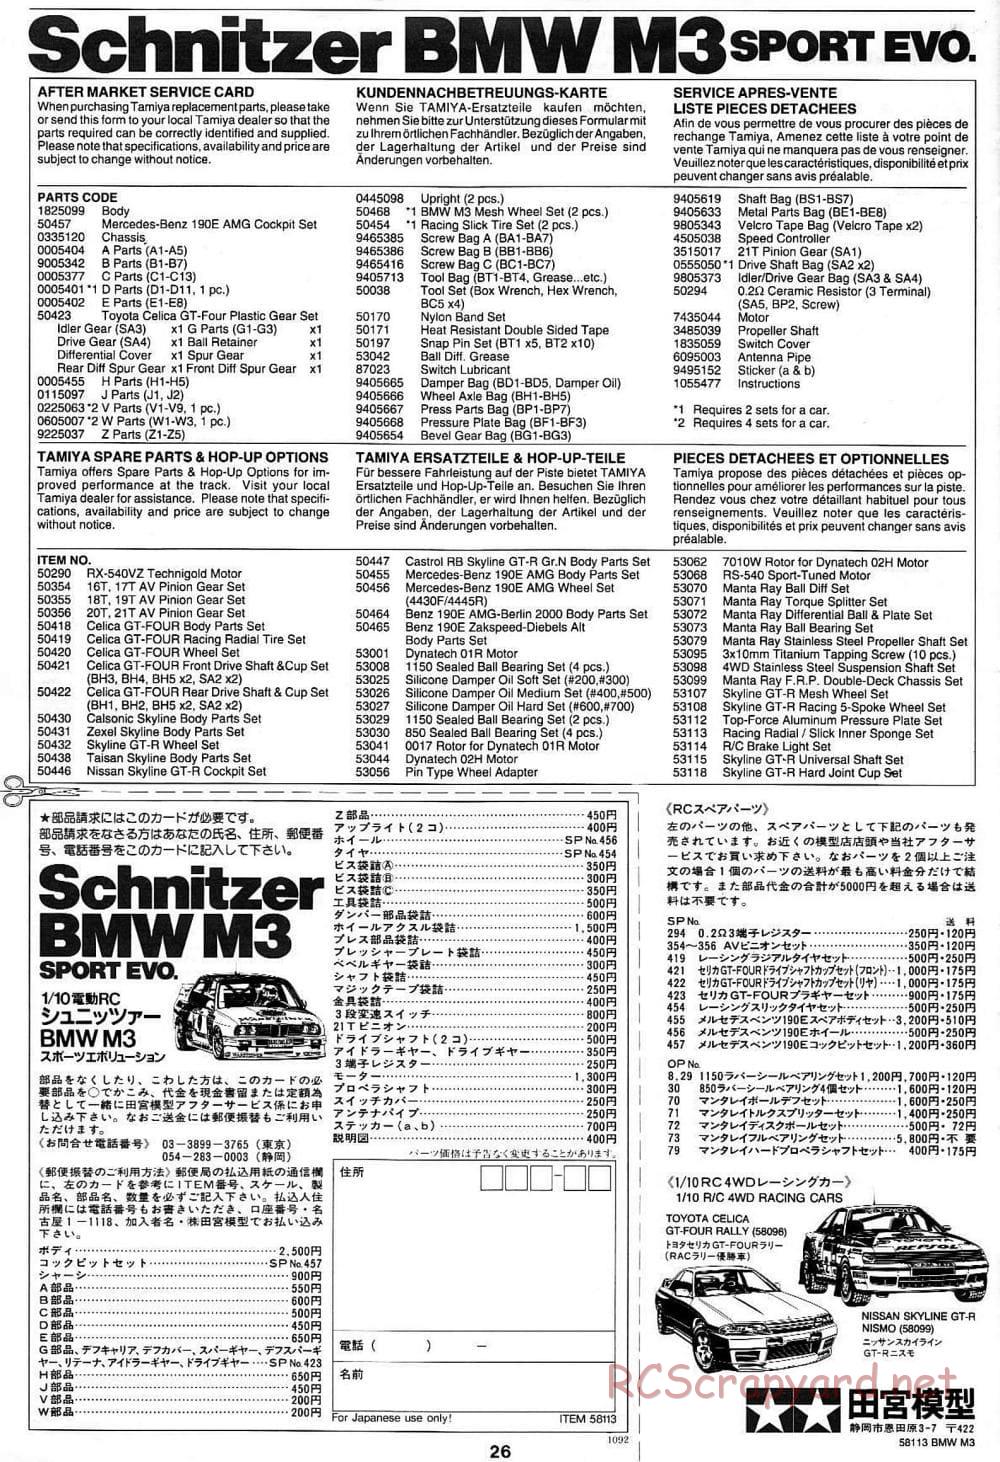 Tamiya - Schnitzer BMW M3 Sport Evo - TA-01 Chassis - Manual - Page 26